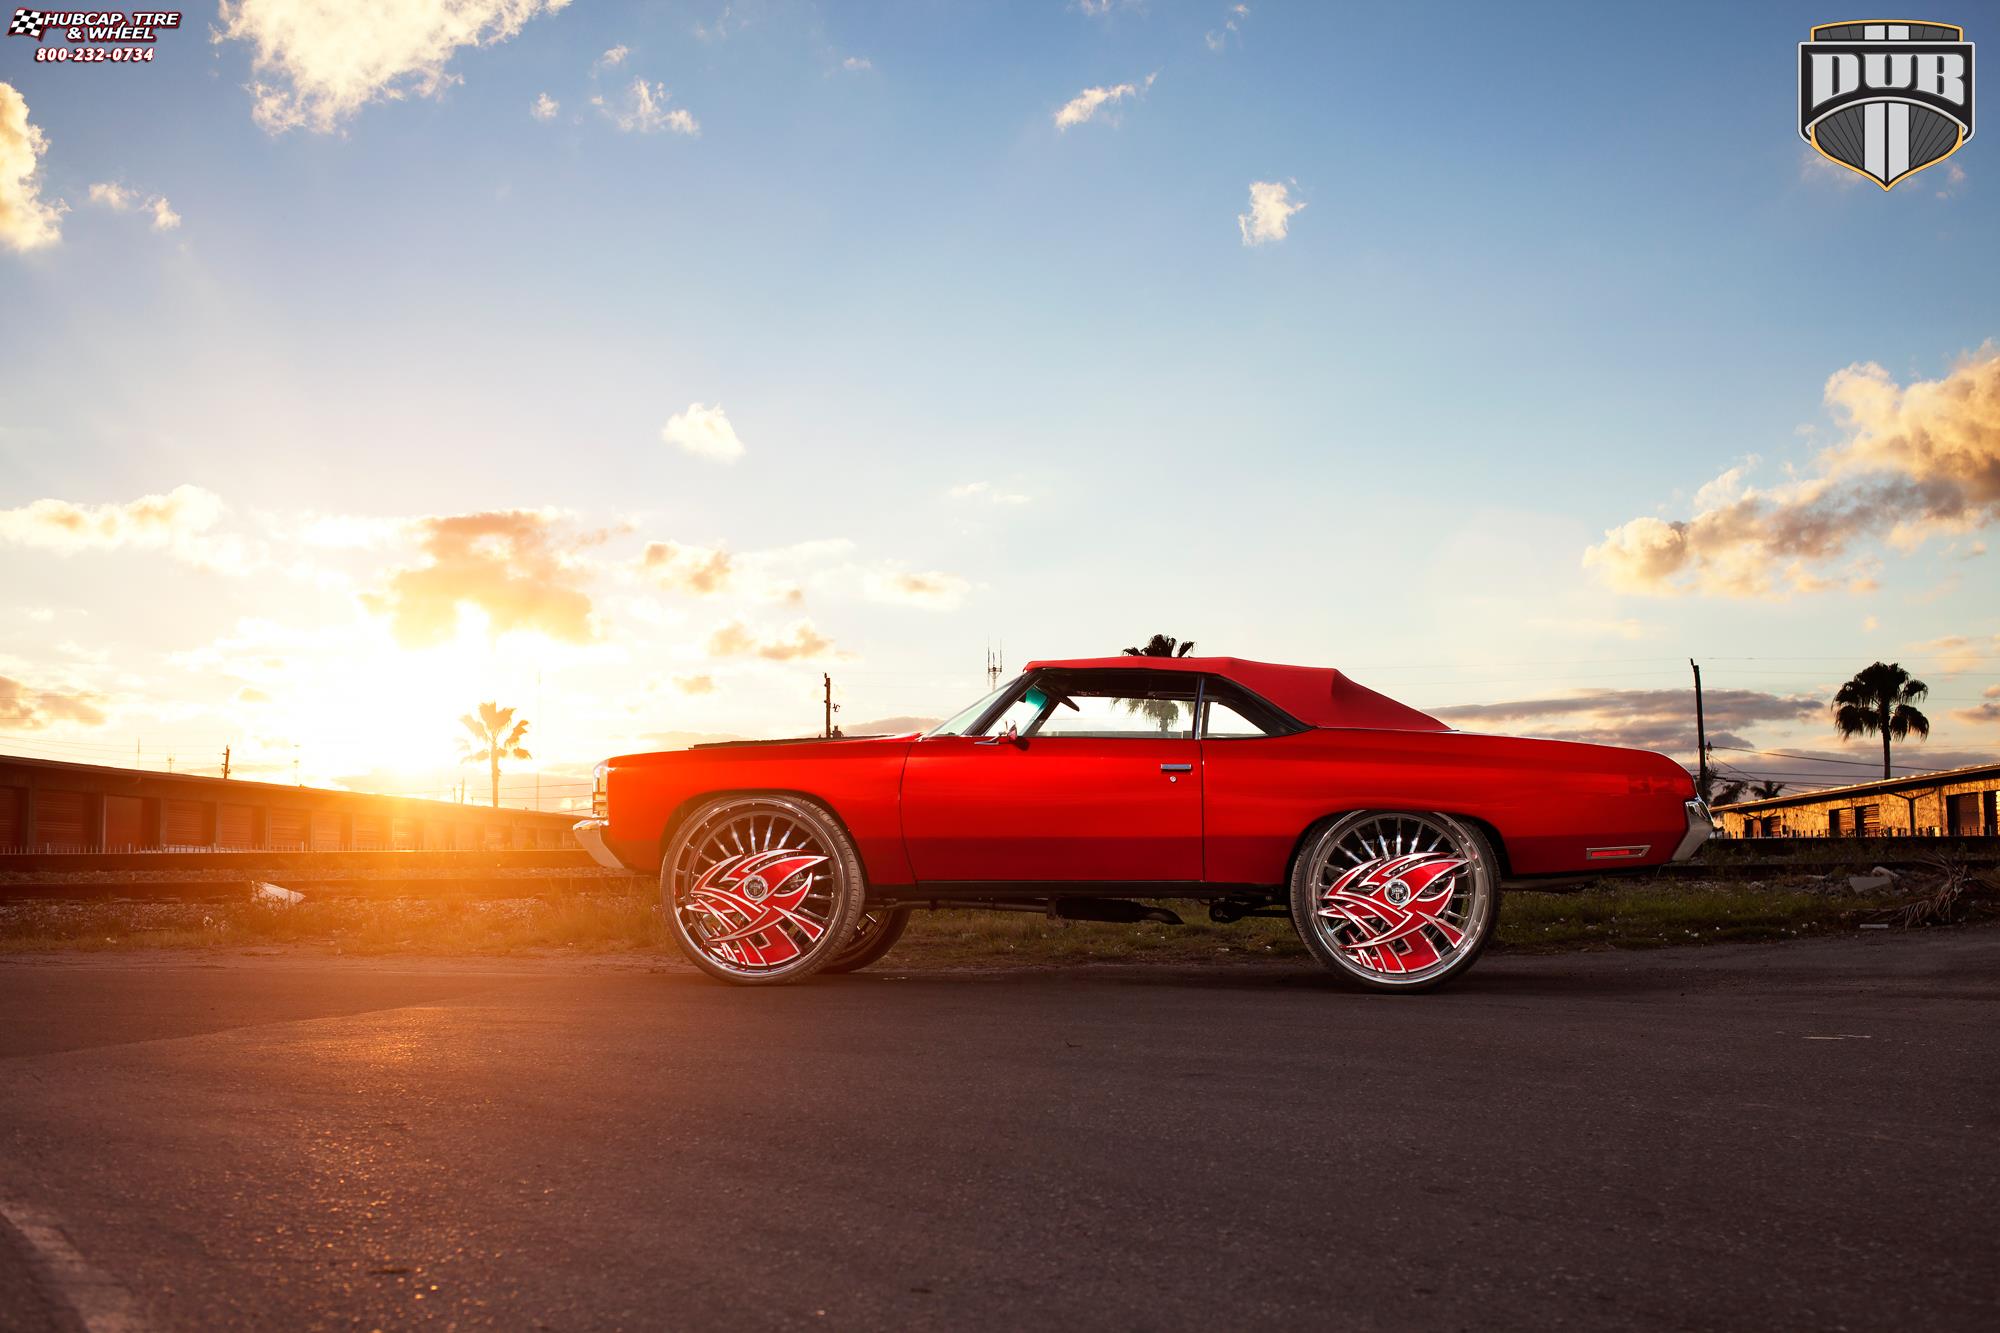 vehicle gallery/chevrolet impala dub s507 razz  Chrome wheels and rims